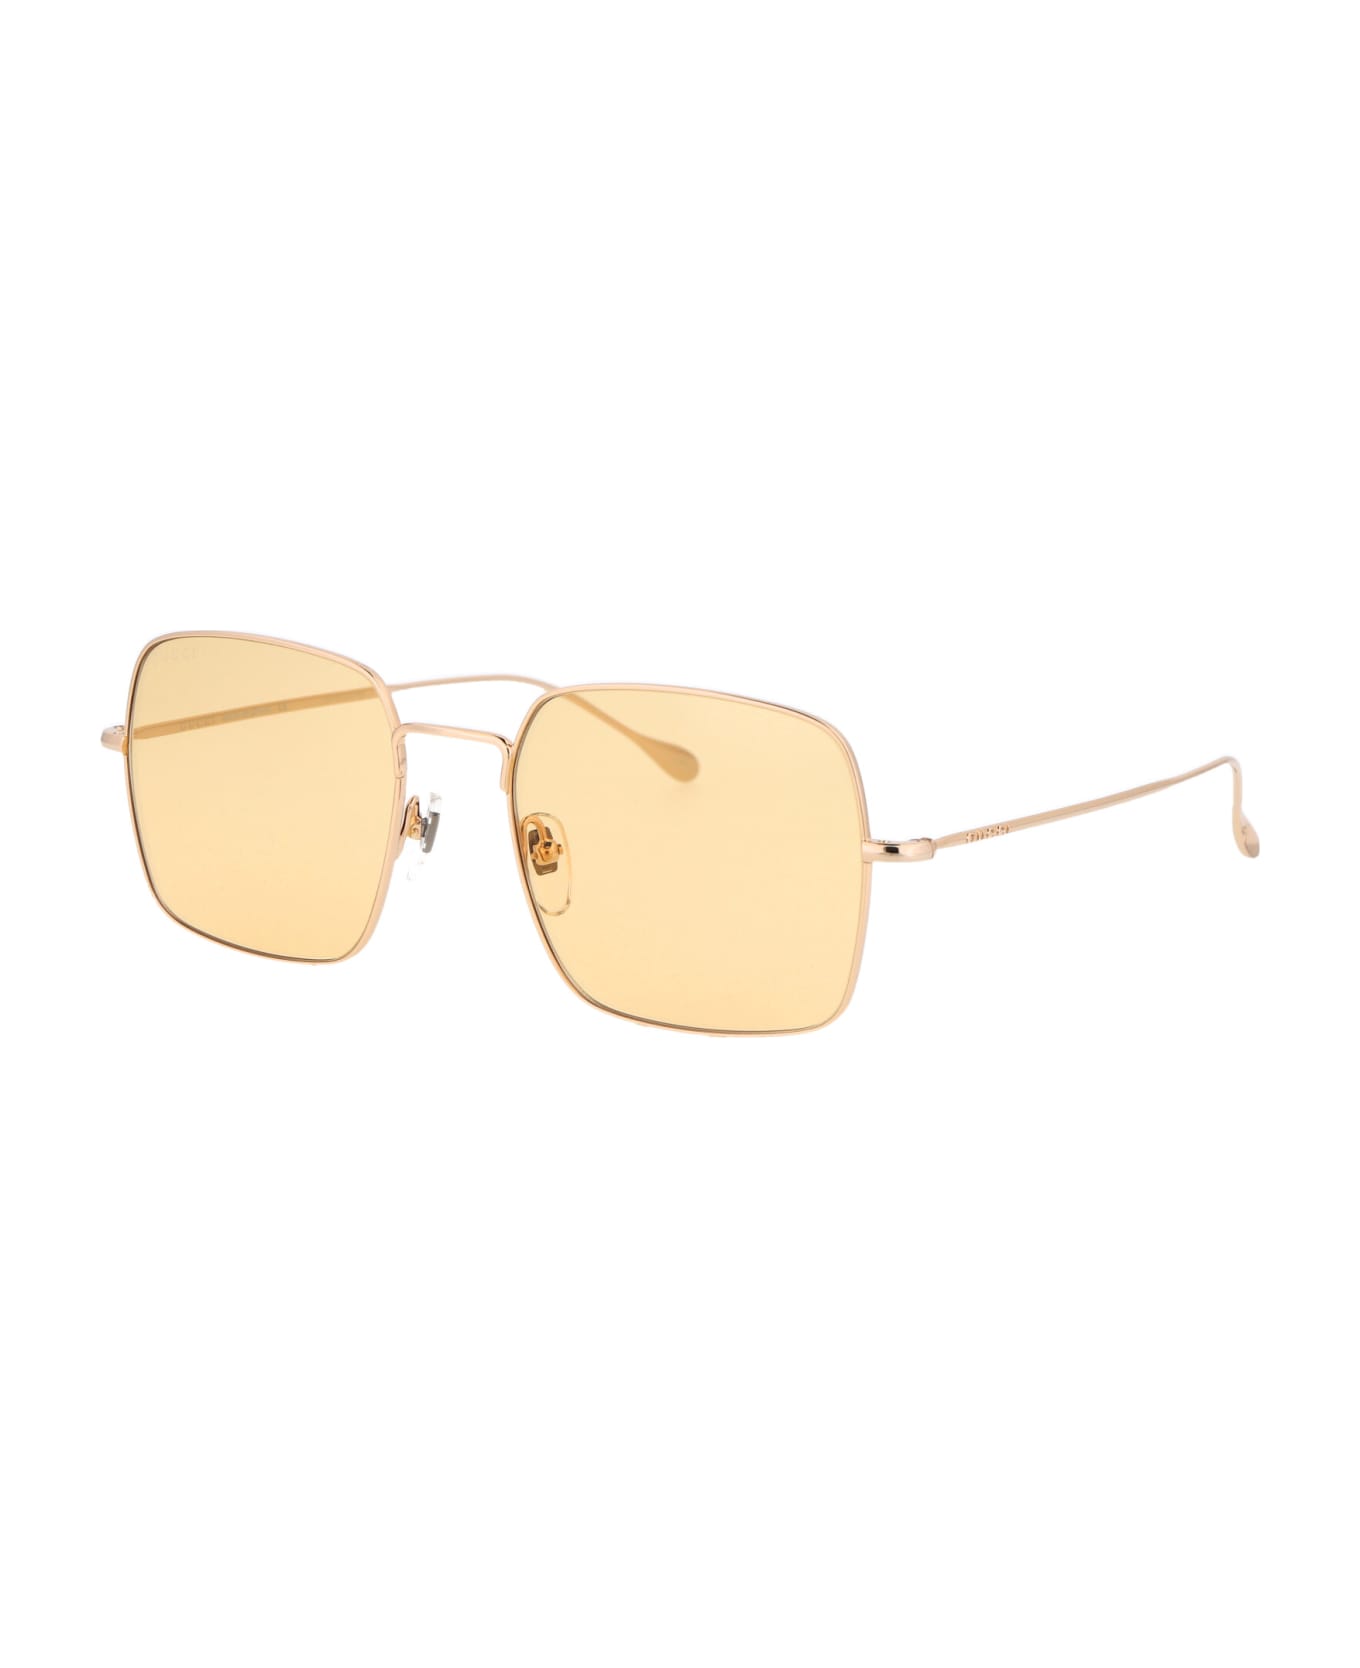 Gucci Eyewear Gg1184s Sunglasses - 003 GOLD GOLD ORANGE